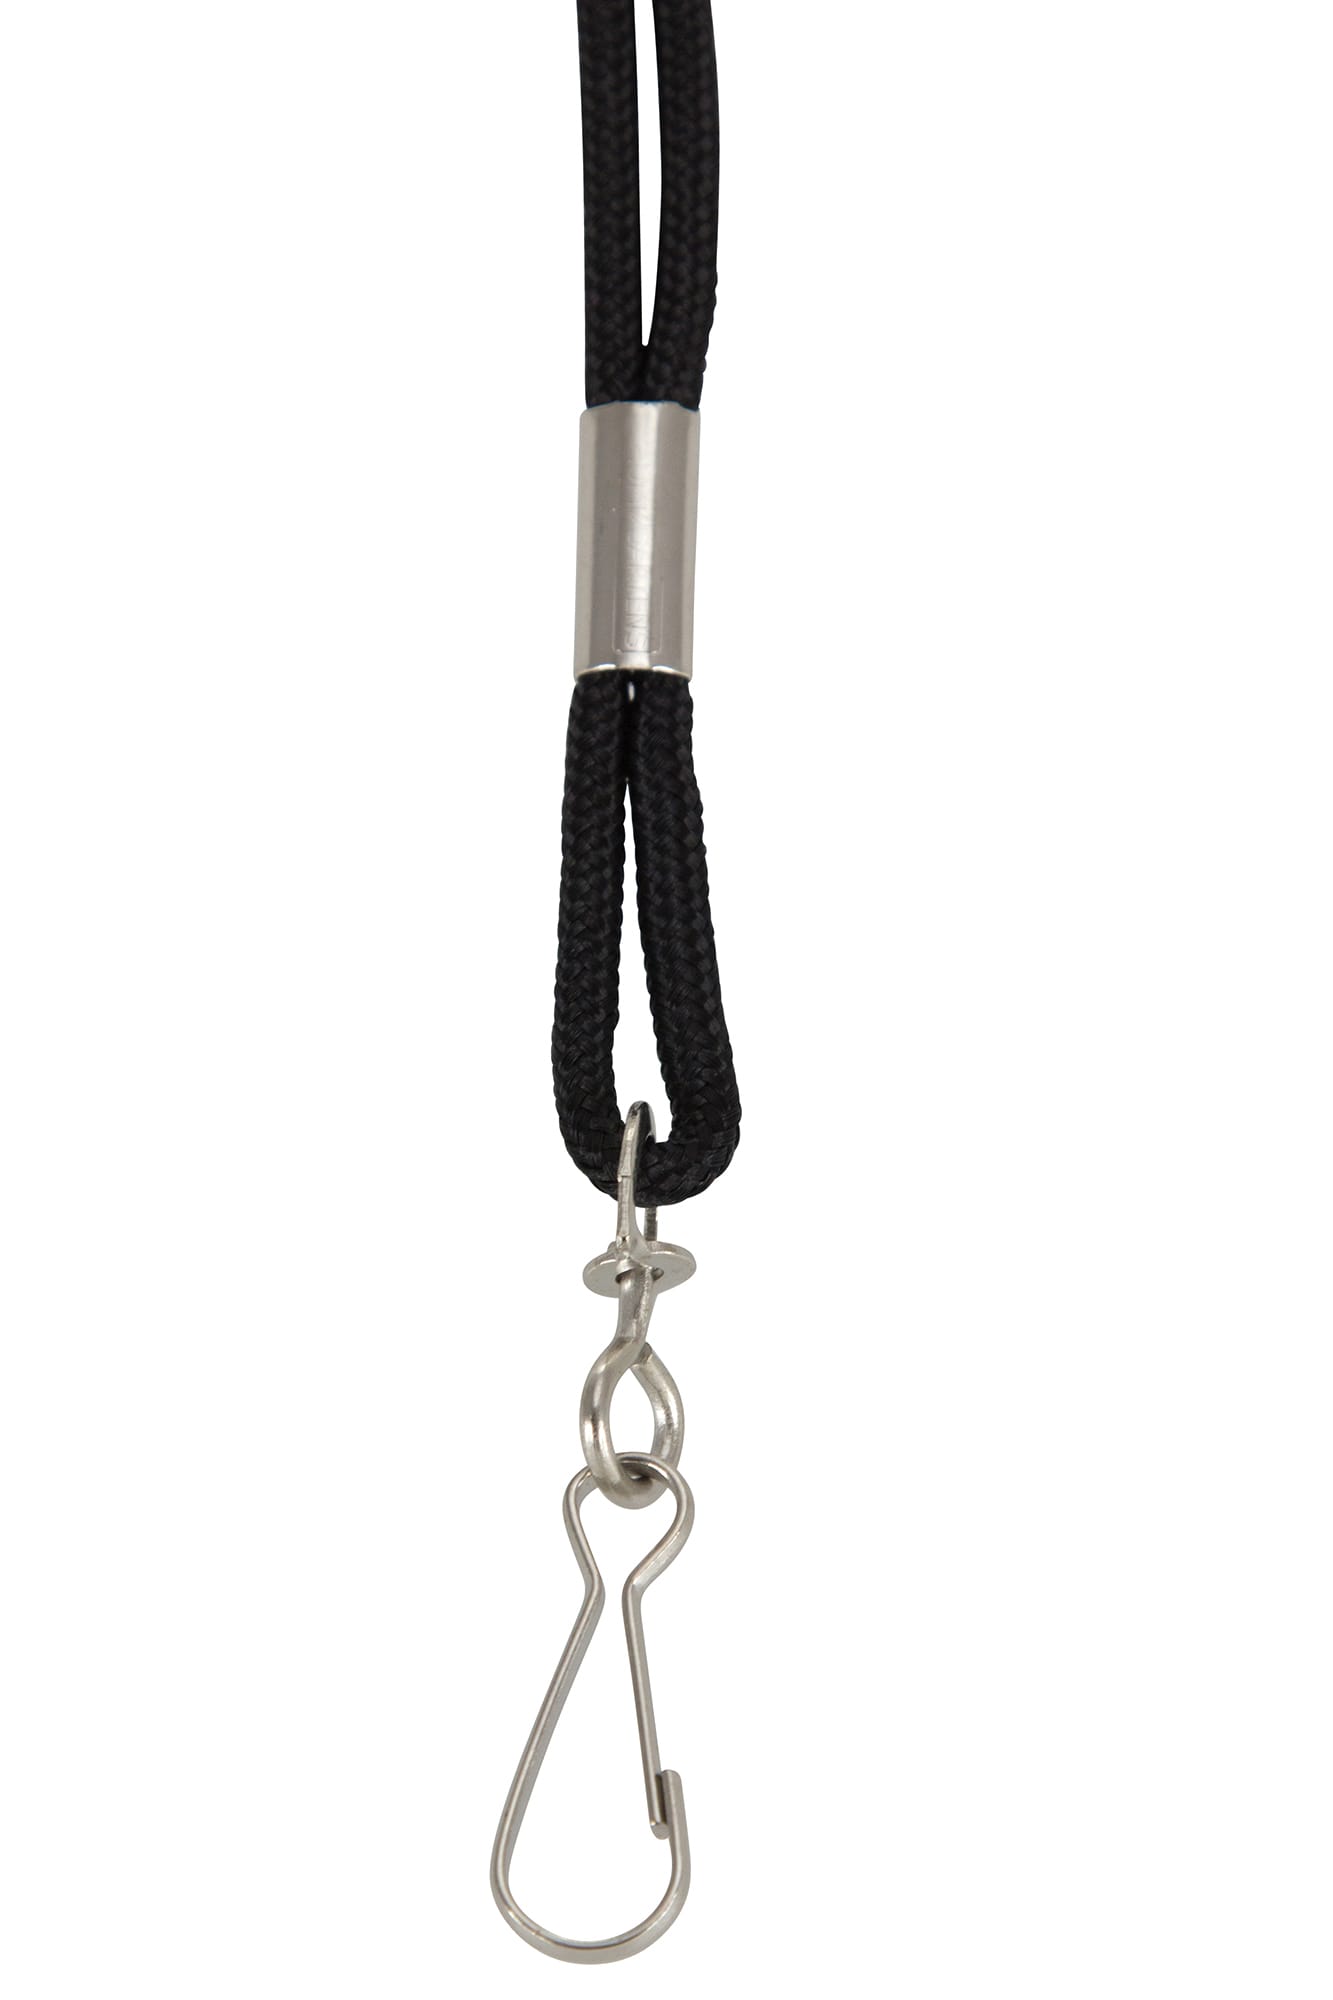 SICURIX Standard Lanyards Hook Rope Style 12 Pack BLACK (68939)